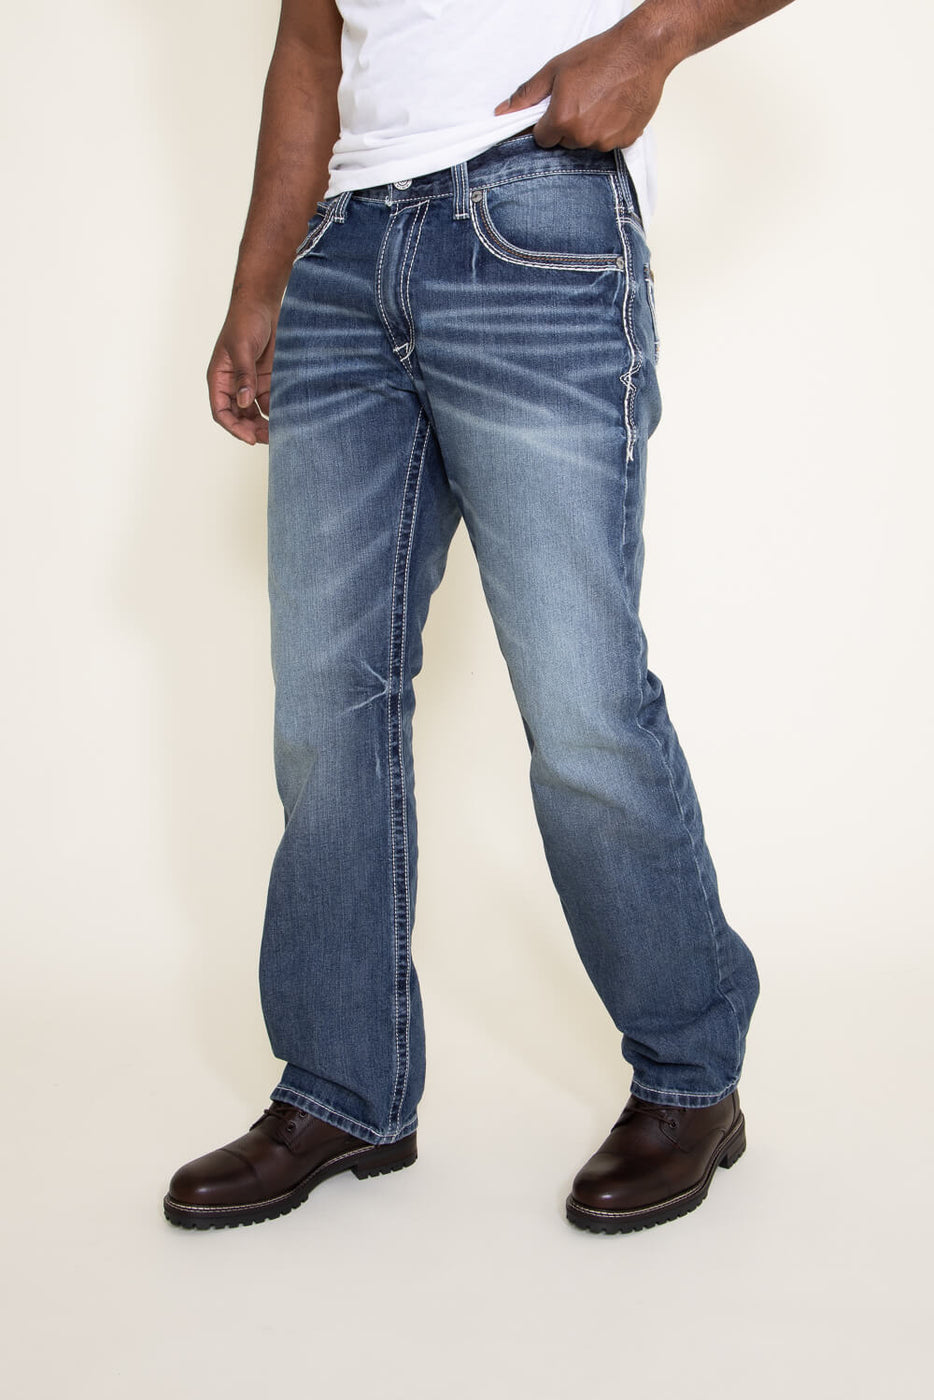 Product Name: Ariat Men's M4 Coltrane Durango Low Rise Fashion Boot Cut  Jeans